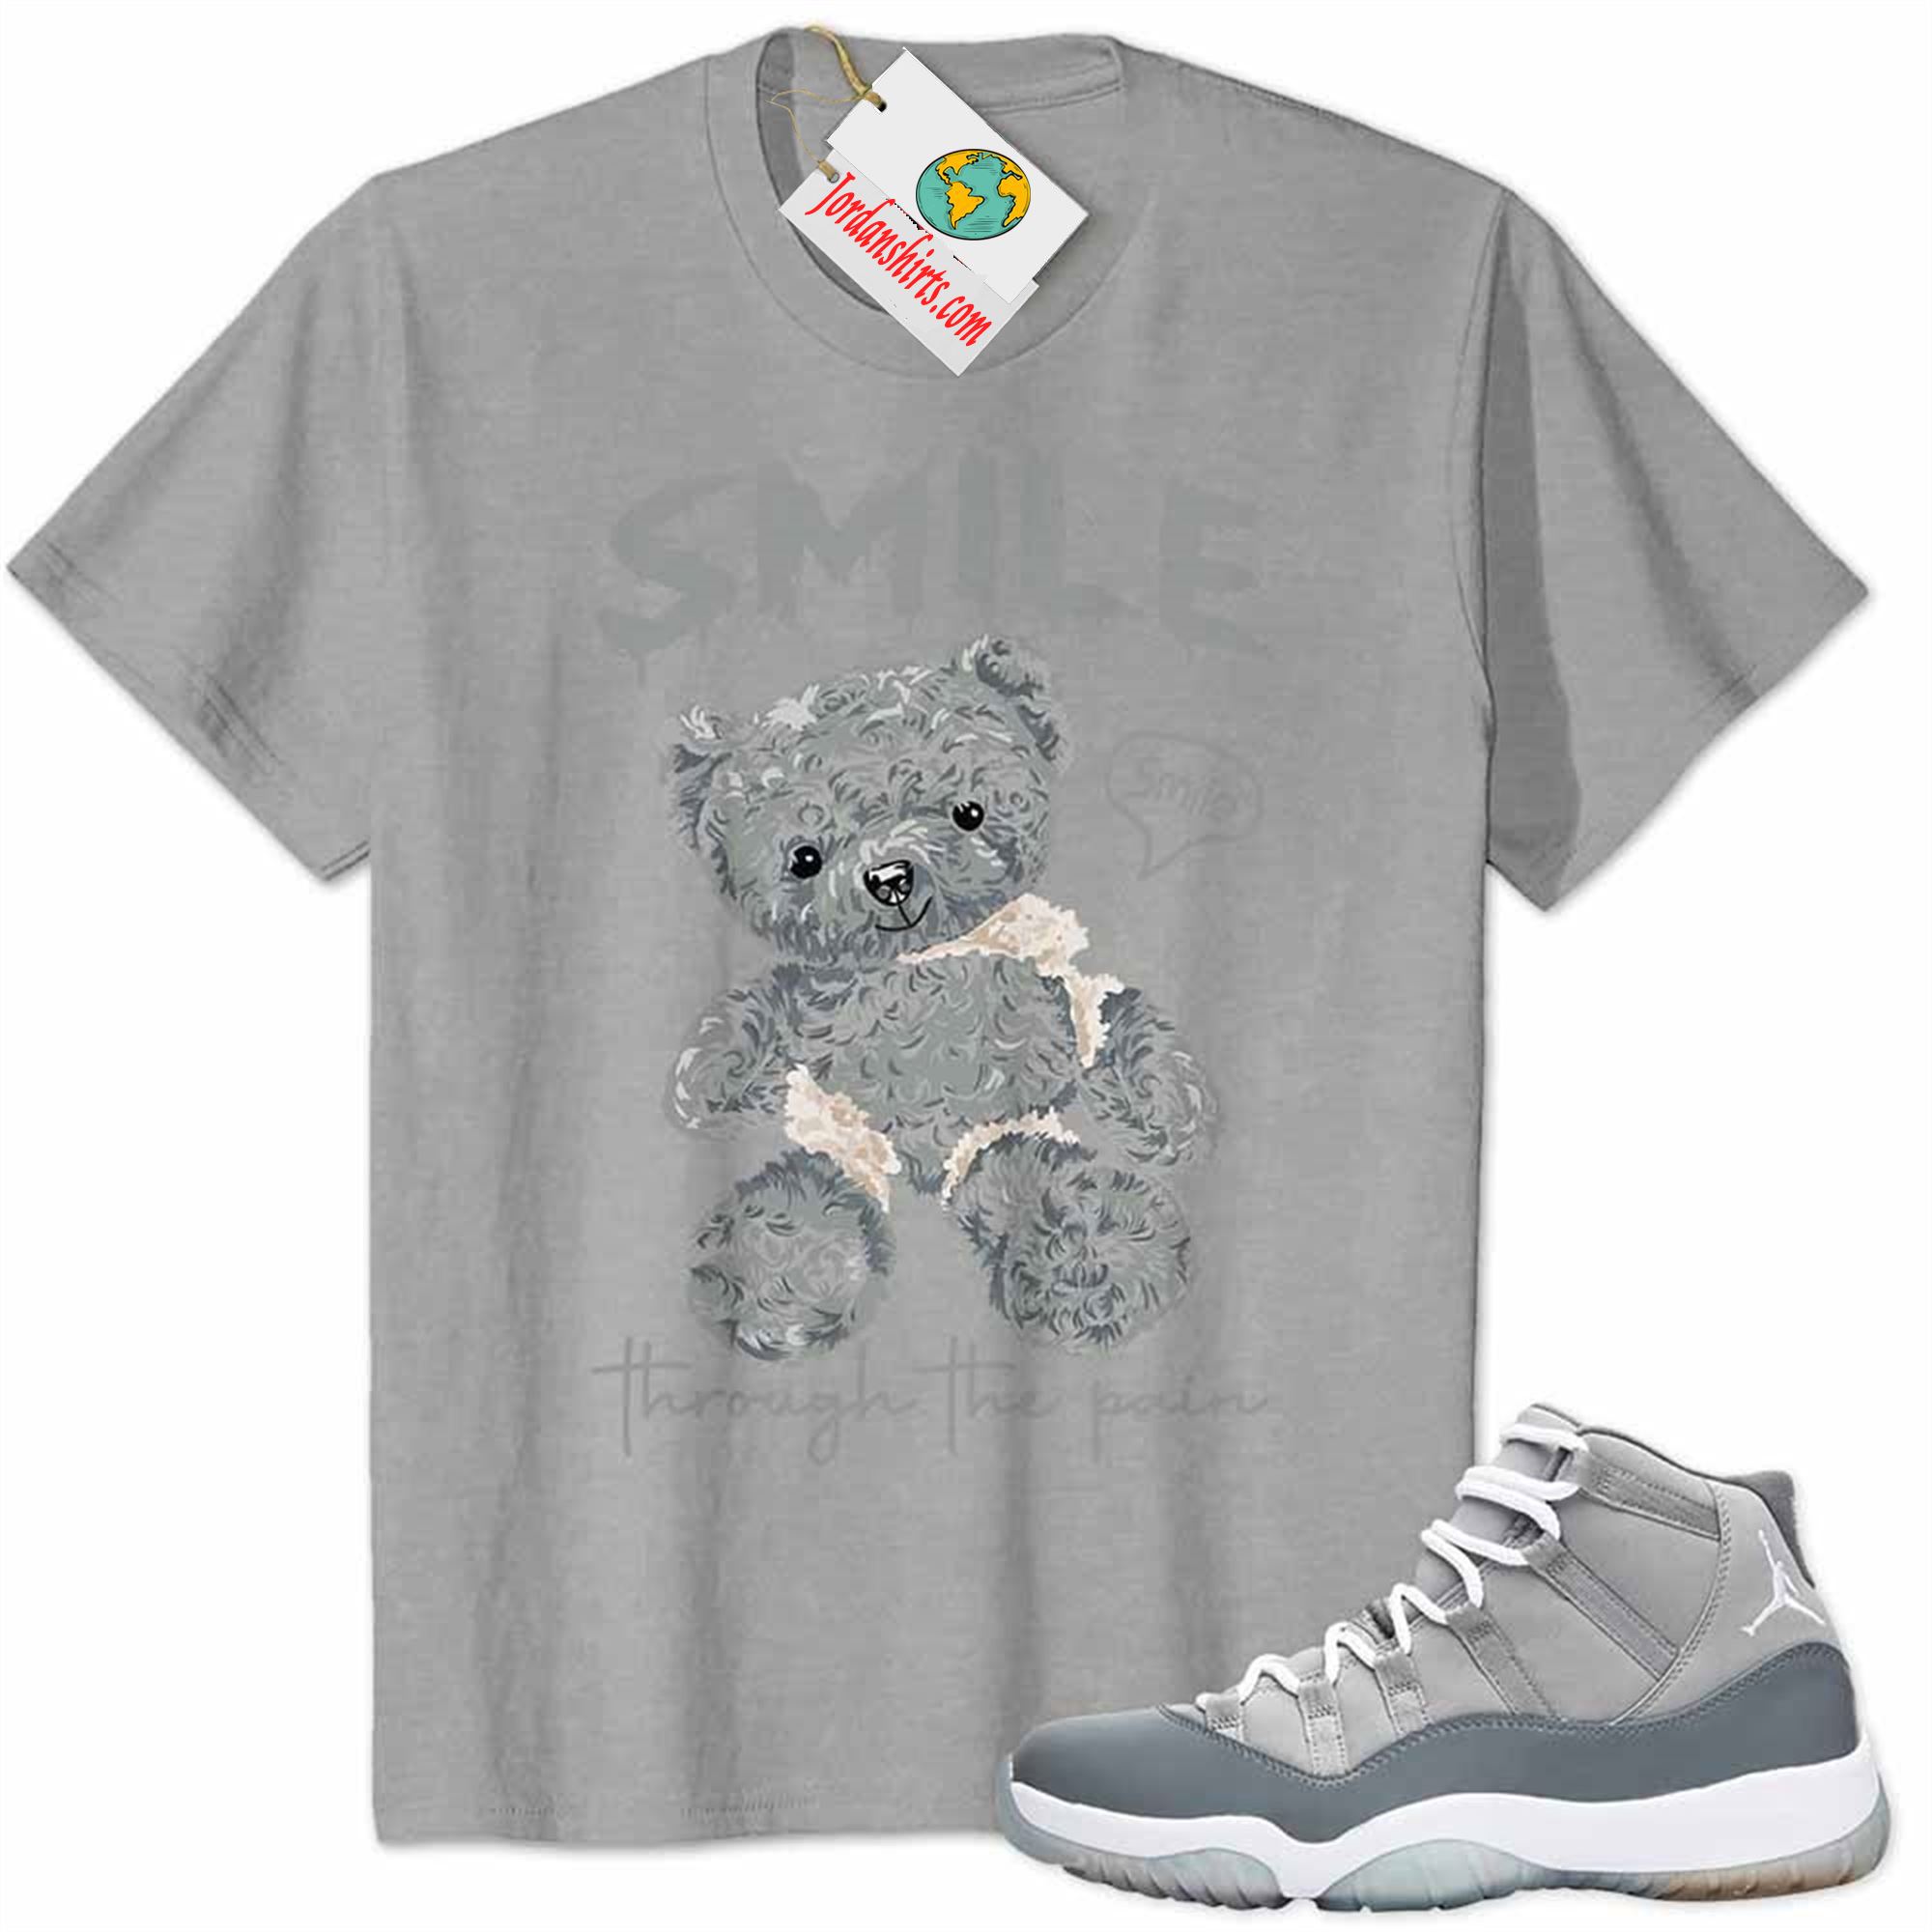 Jordan 11 Shirt, Teddy Bear Smile Pain Grey Air Jordan 11 Cool Grey 11s Full Size Up To 5xl